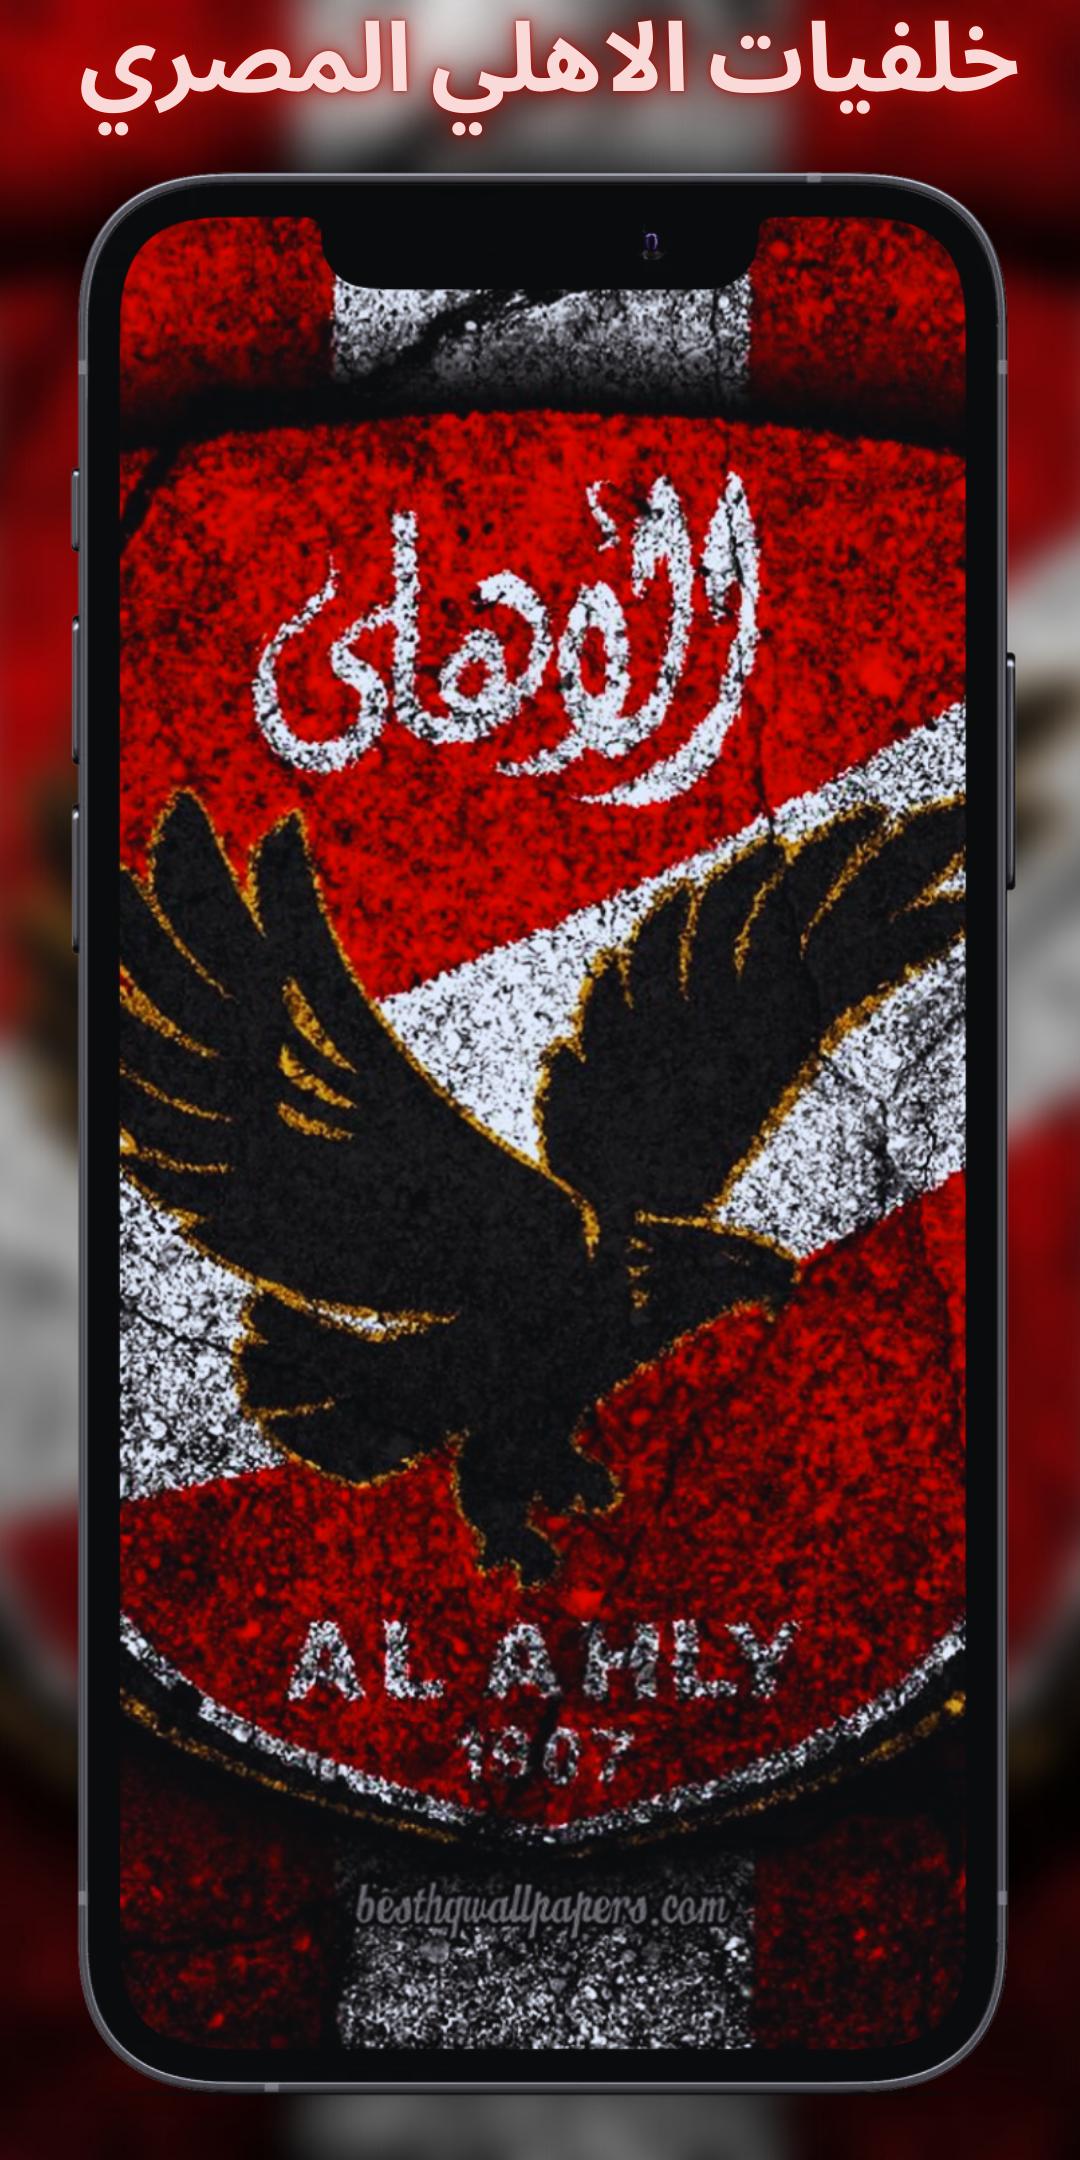 Скачать النادي الأهلي المصري خلفيات و أغاني 2021 APK для Android